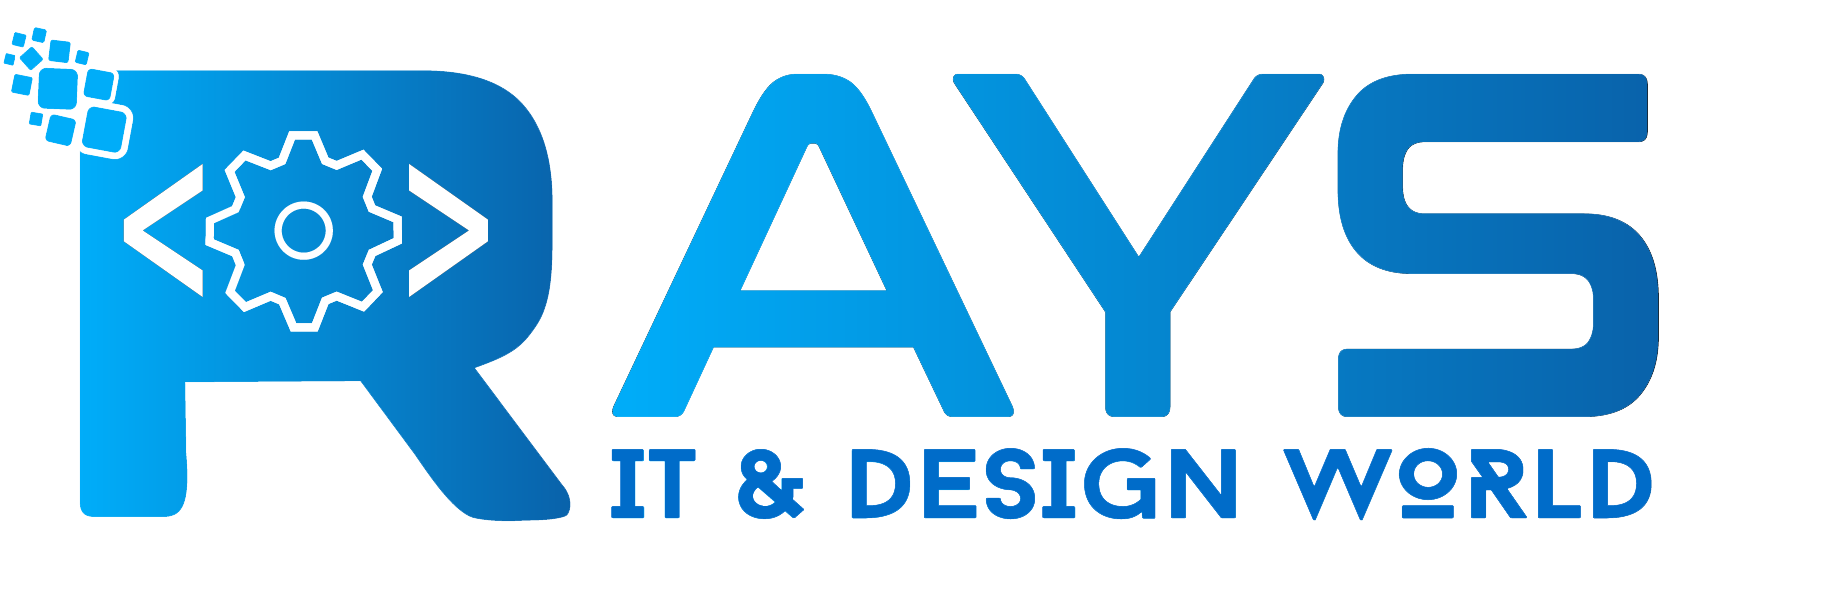 Rays IT & Design World Logo